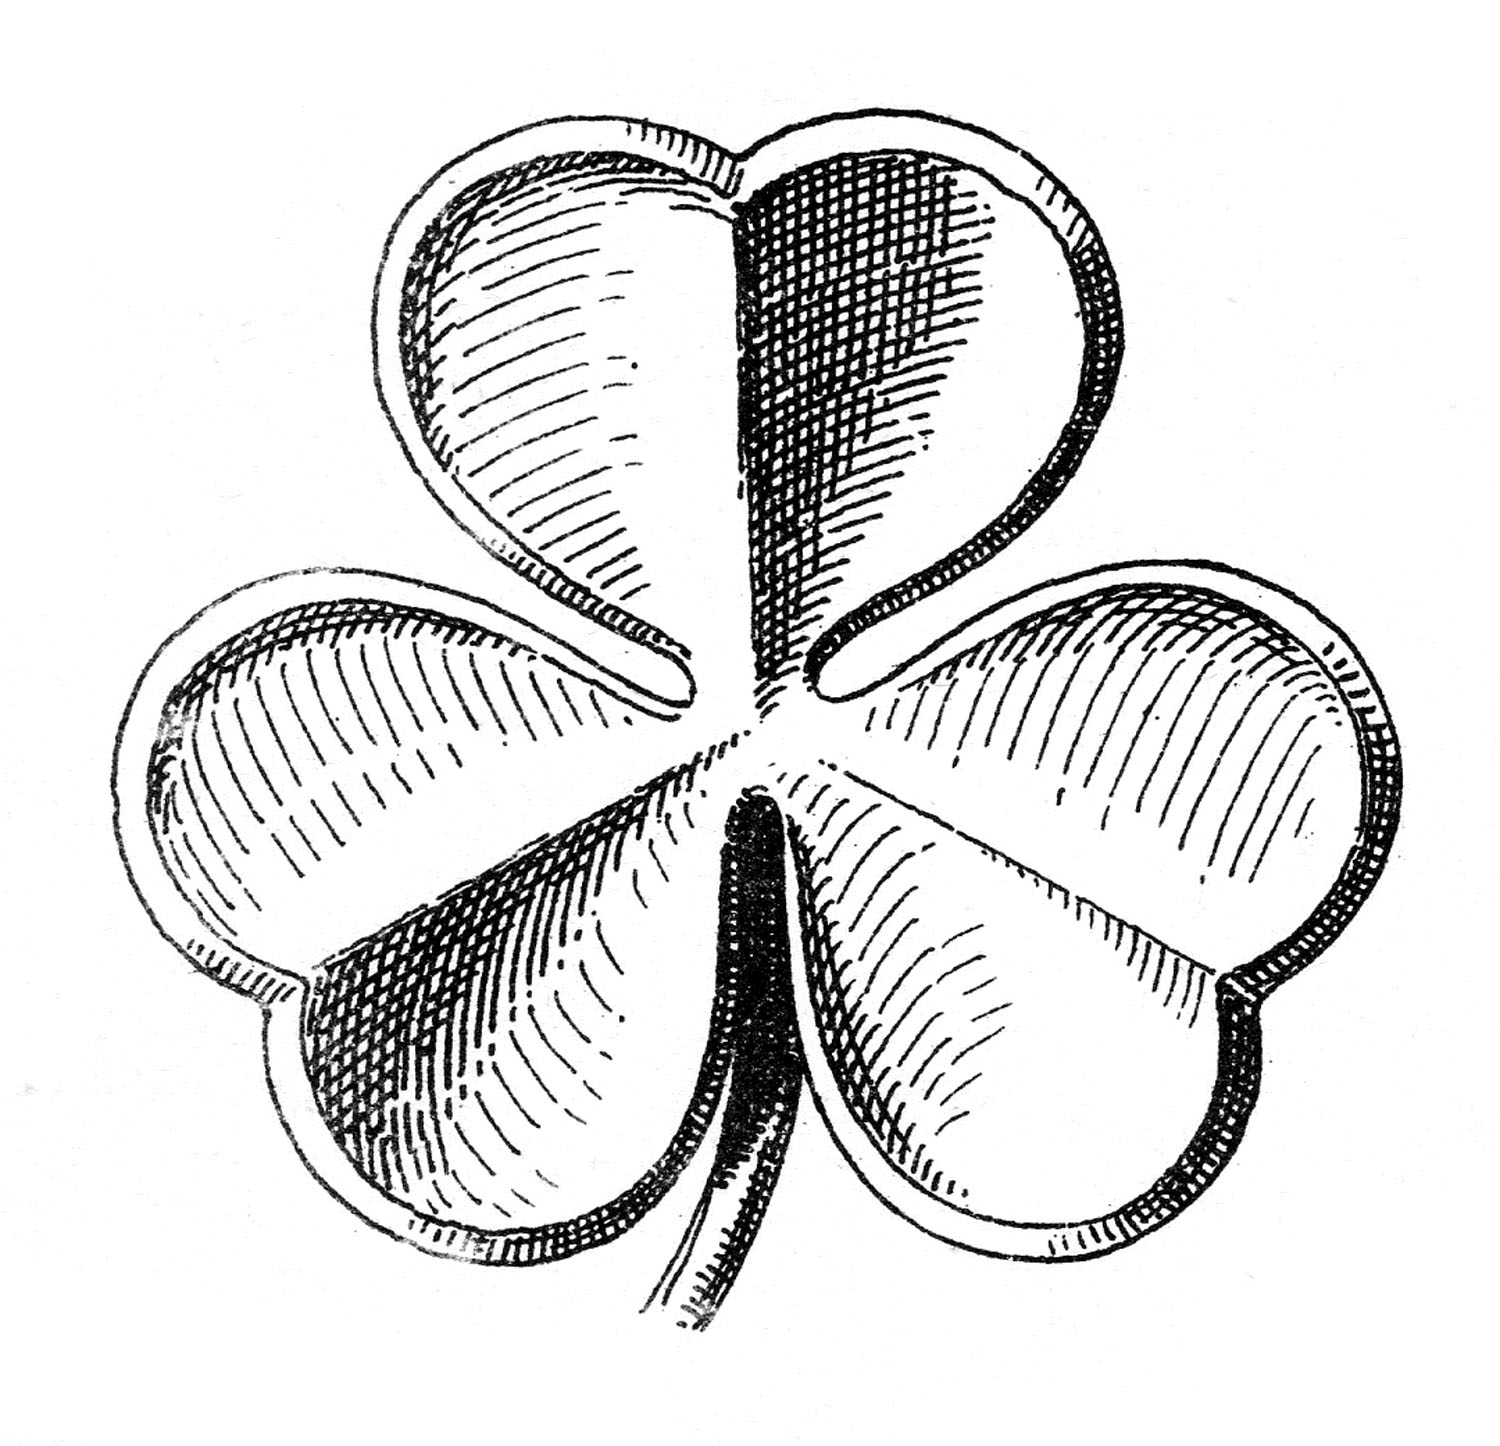 Public Domain Clip Art - Shamrocks - St. Patrick's Day - The Graphics Fairy